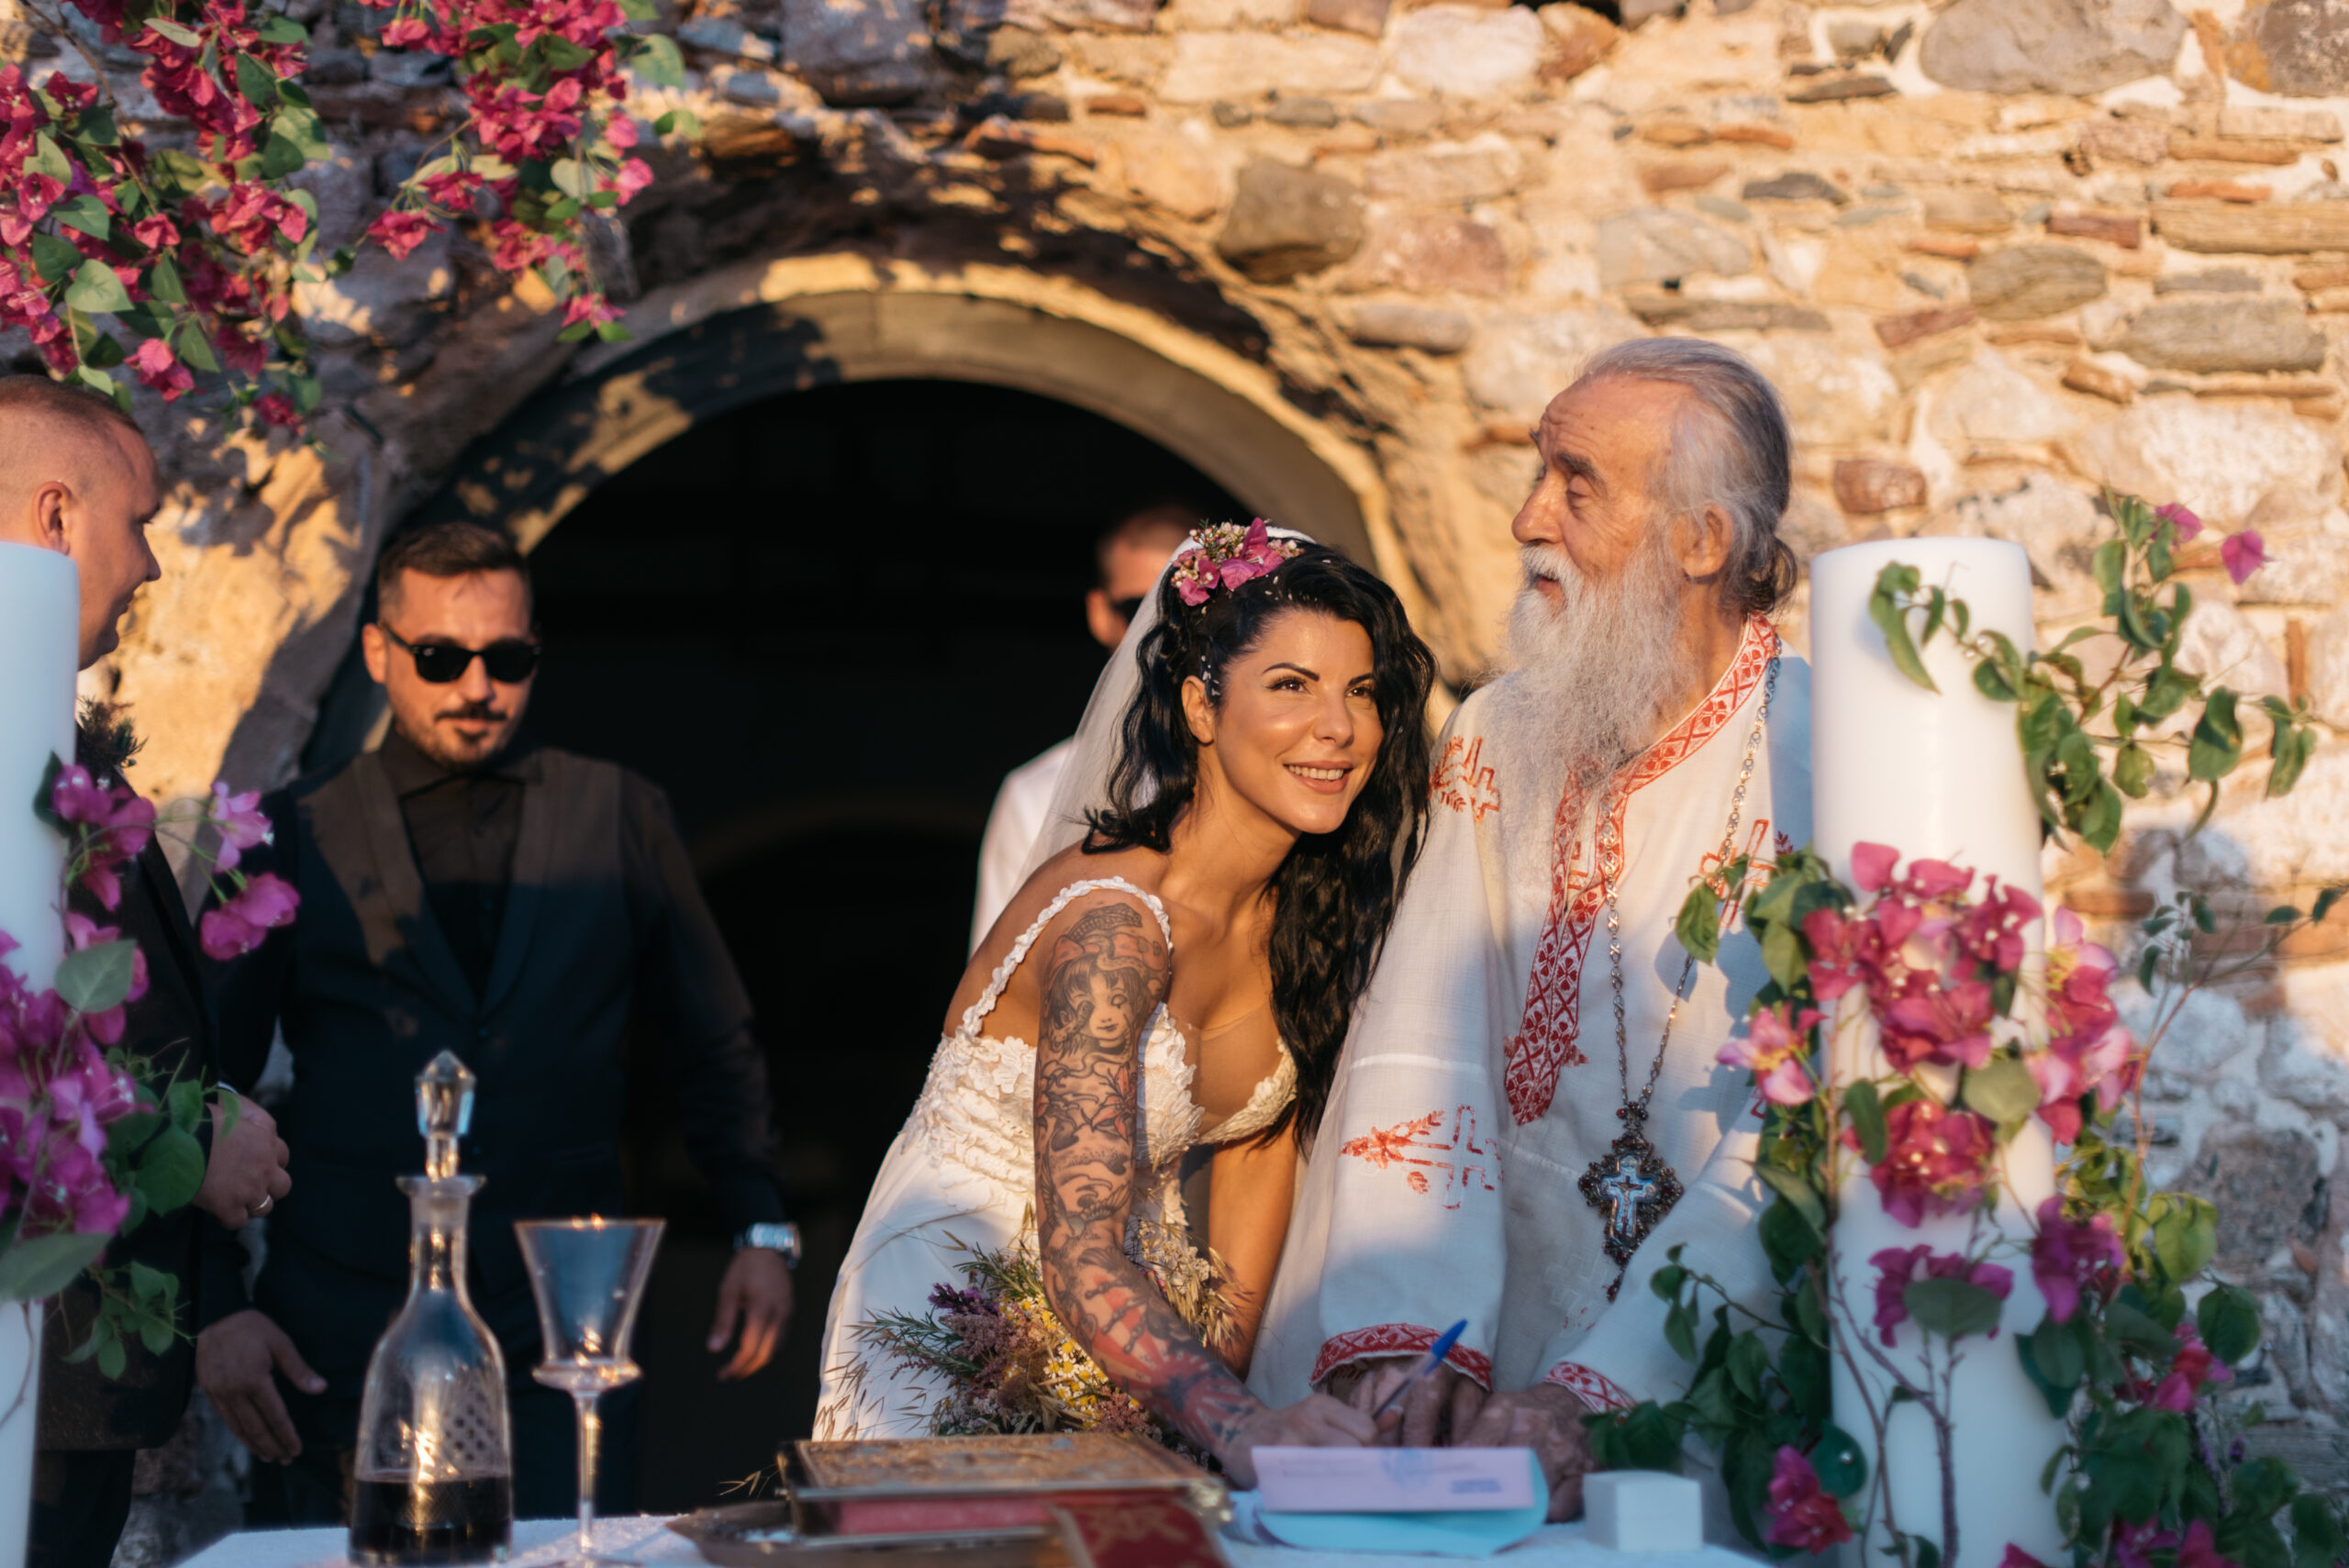 Island Athens riviera wedding in greece bougainvillea design γάμος στην Αθηναϊκή ριβιέρα με θέμα τη βουκαμβίλια διακόσμηση